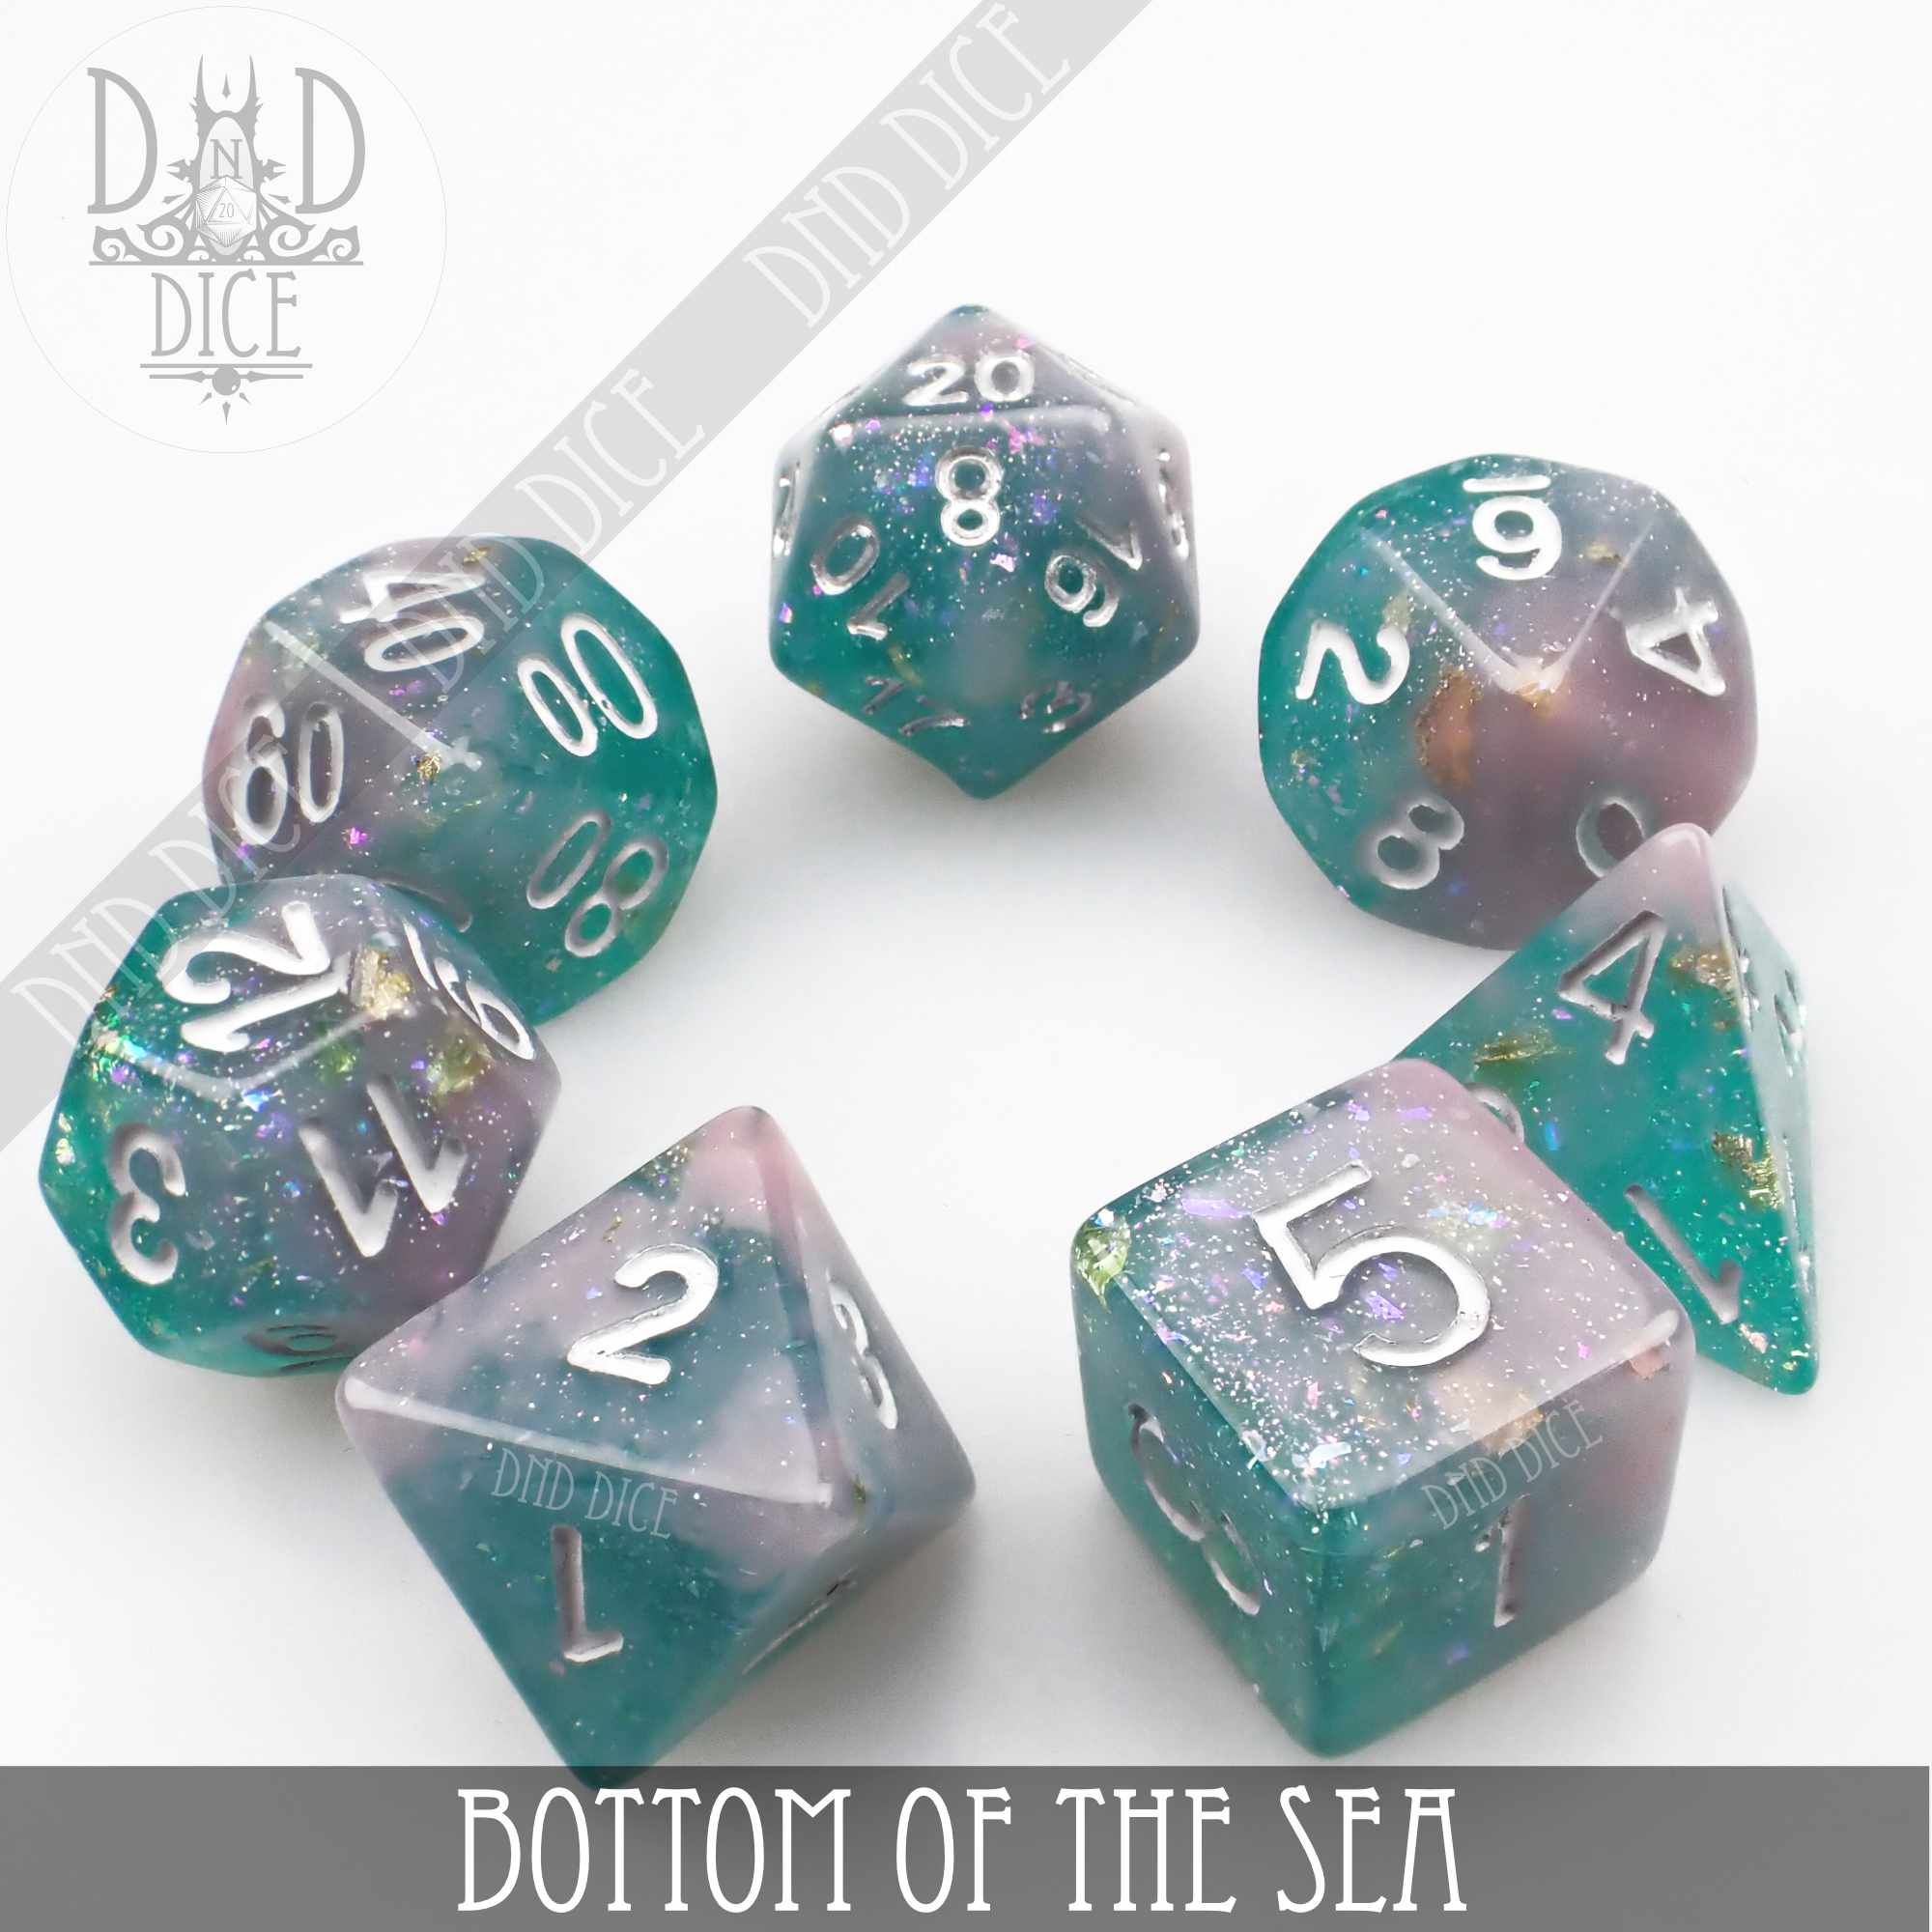 Bottom of the Sea Dice Set